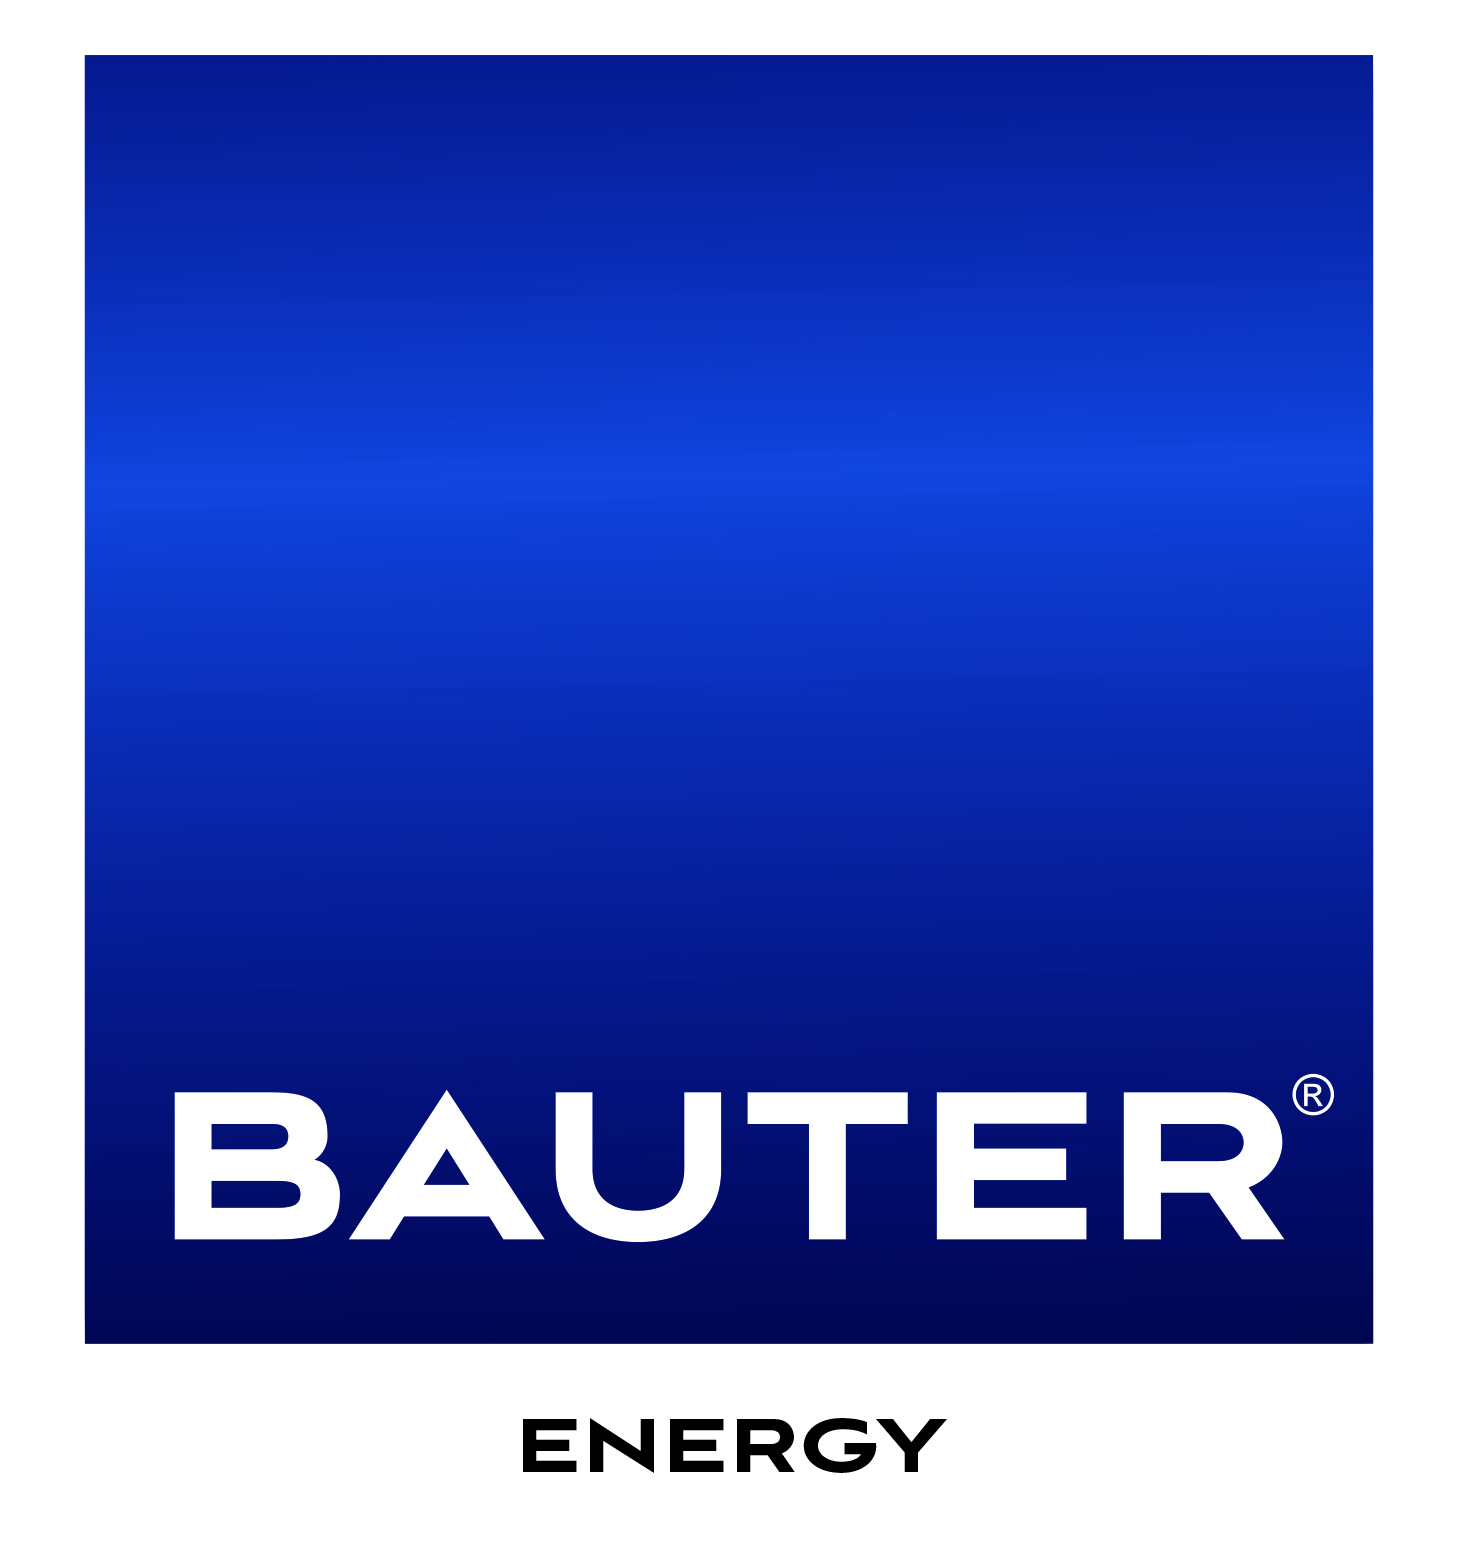 BAUTER logo